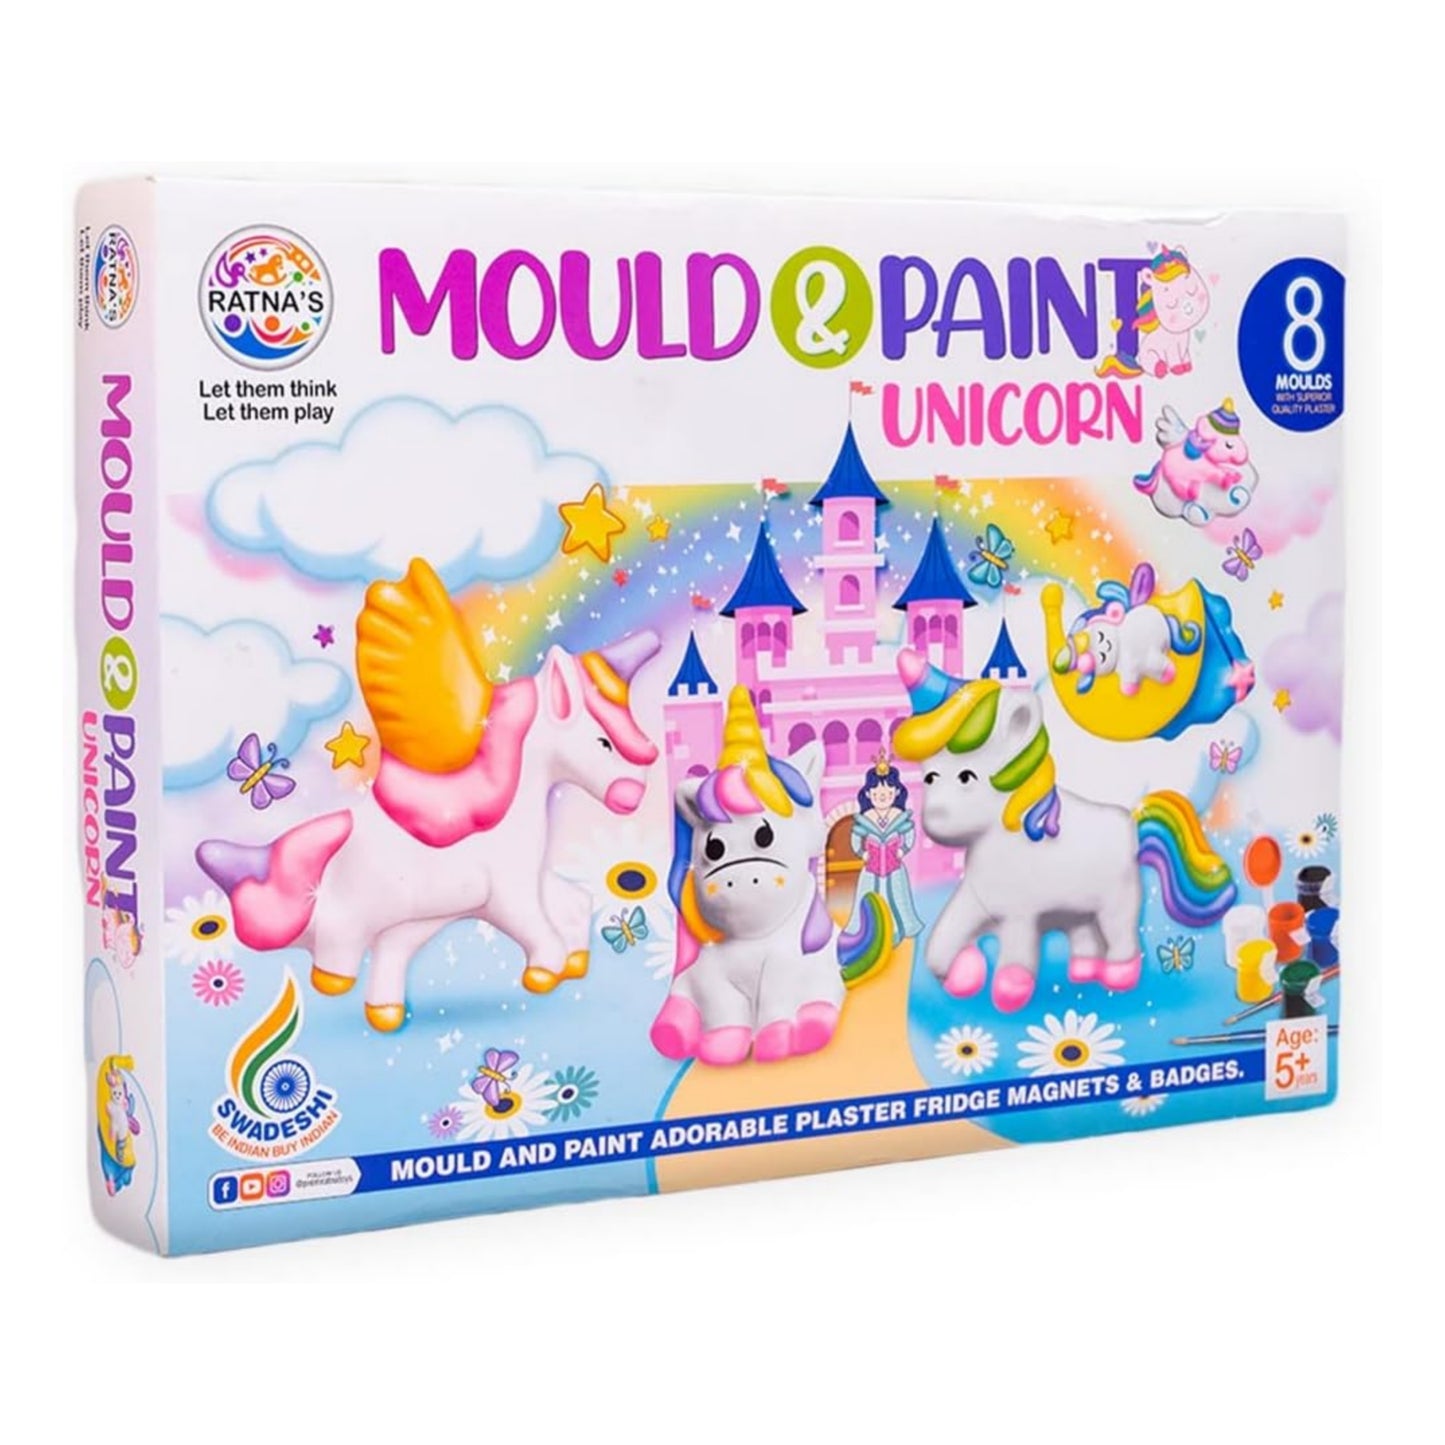 RATNA'S Mould & Paint Unicorn DIY Kit